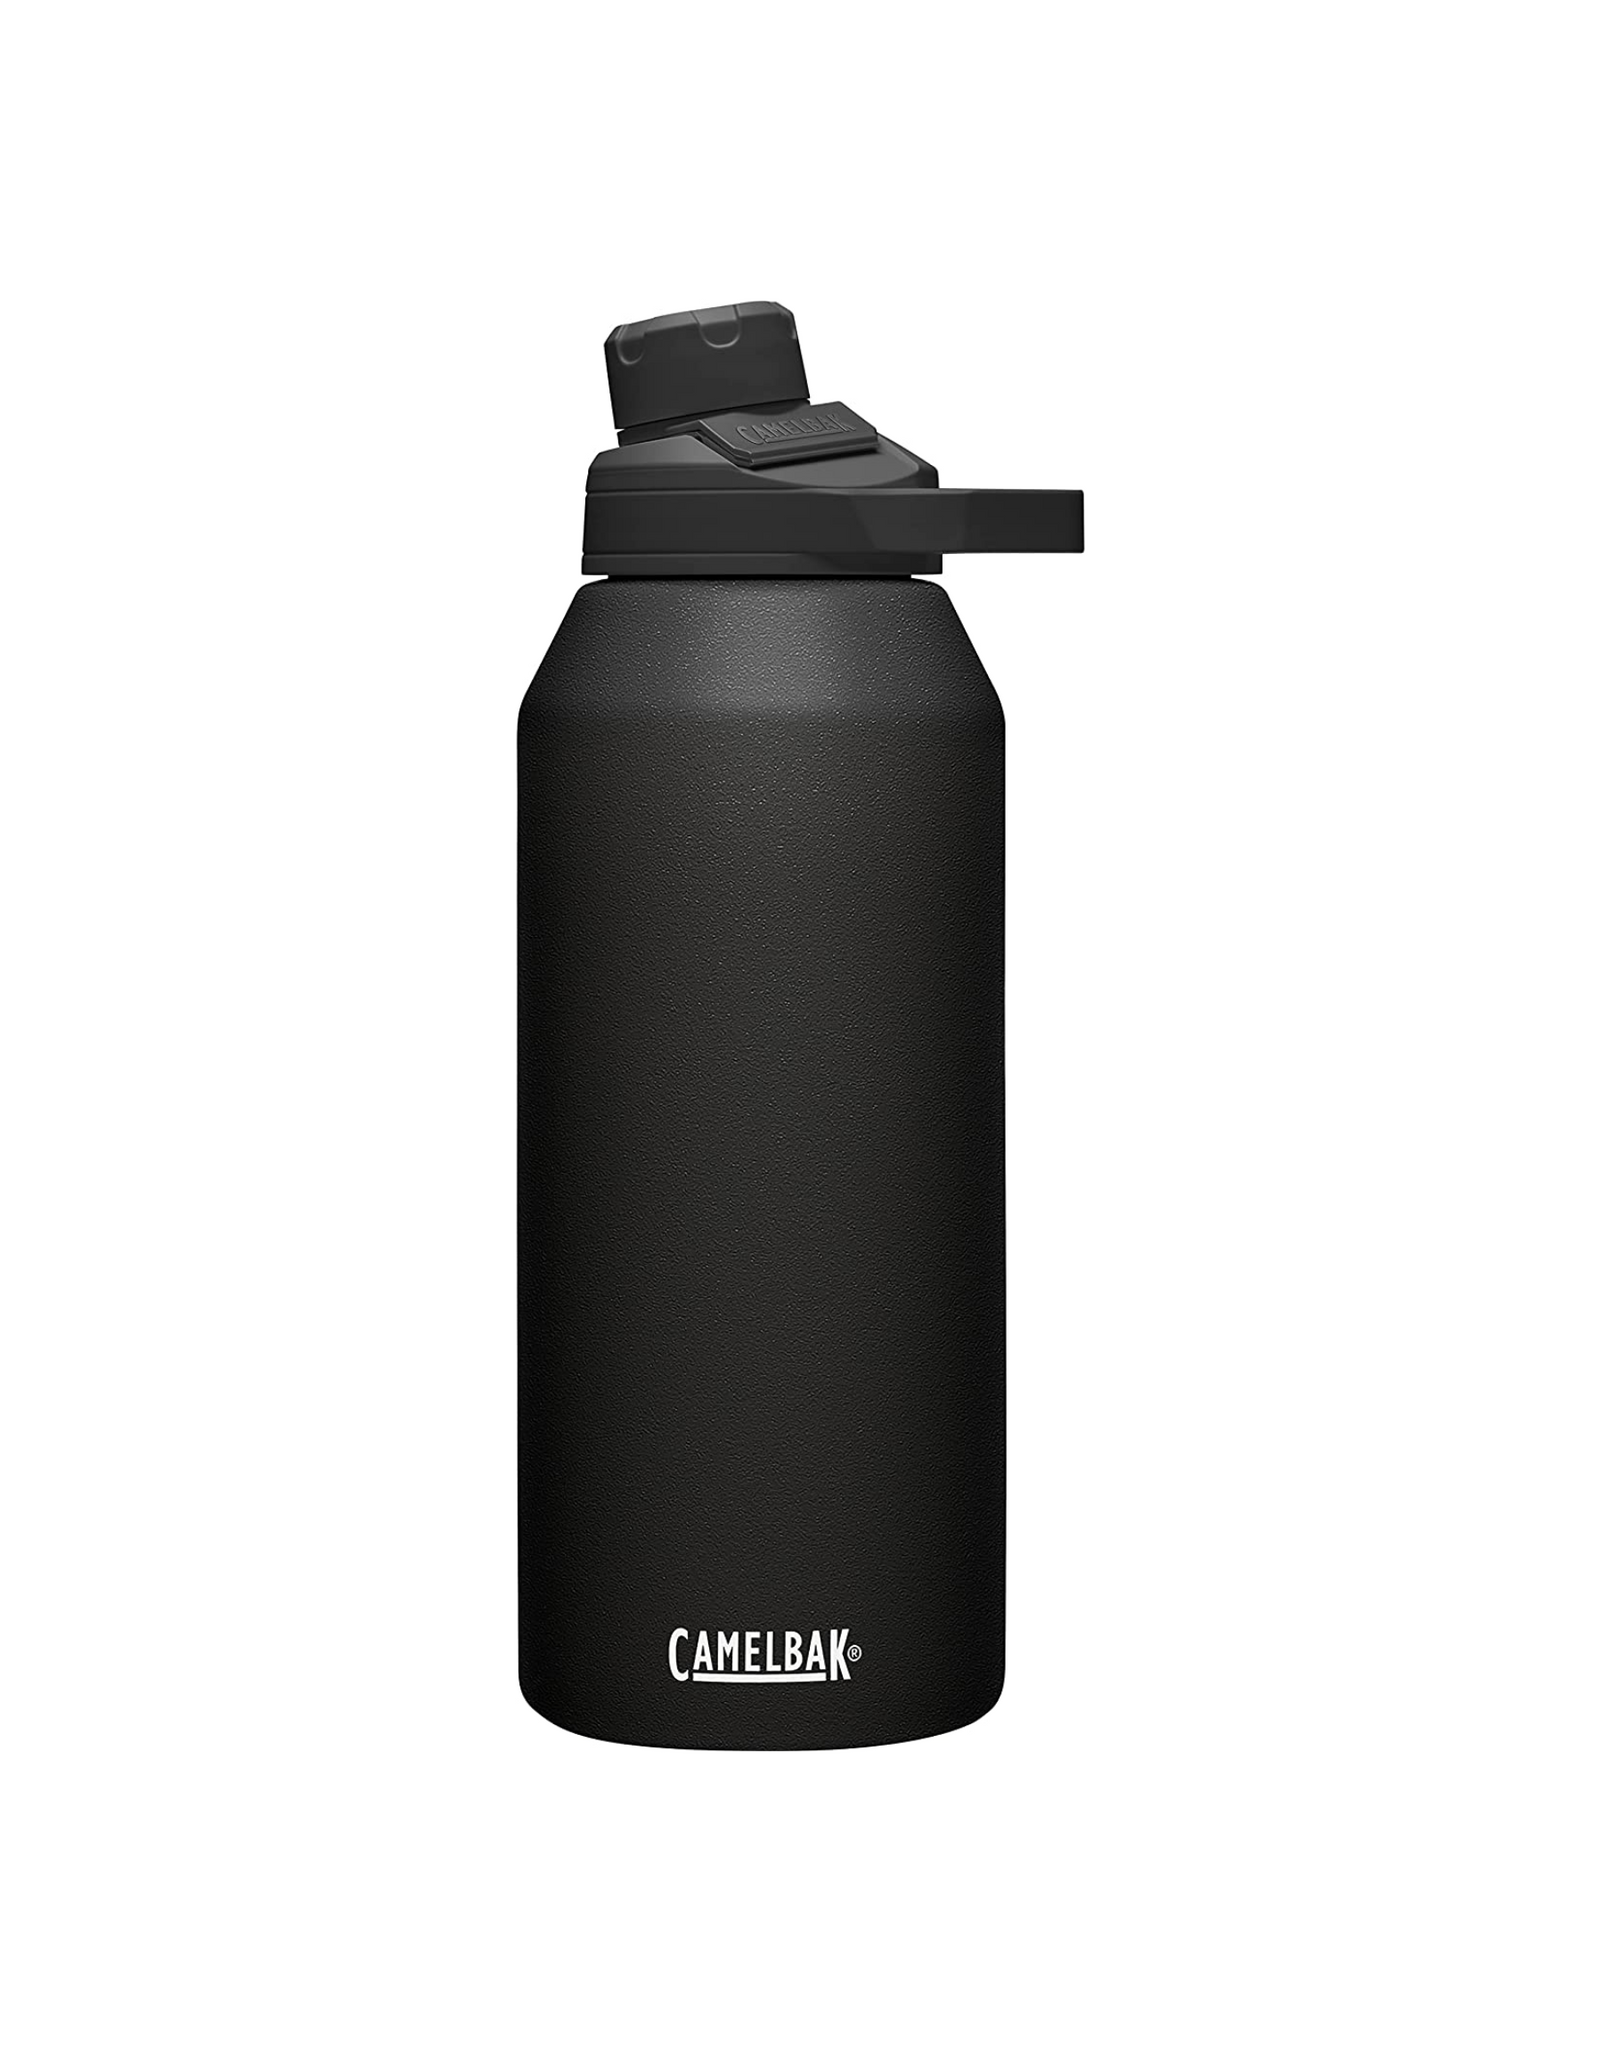 CamelBak Chute Mag Water Bottle, Insulated Stainless Steel, 40 oz, Black